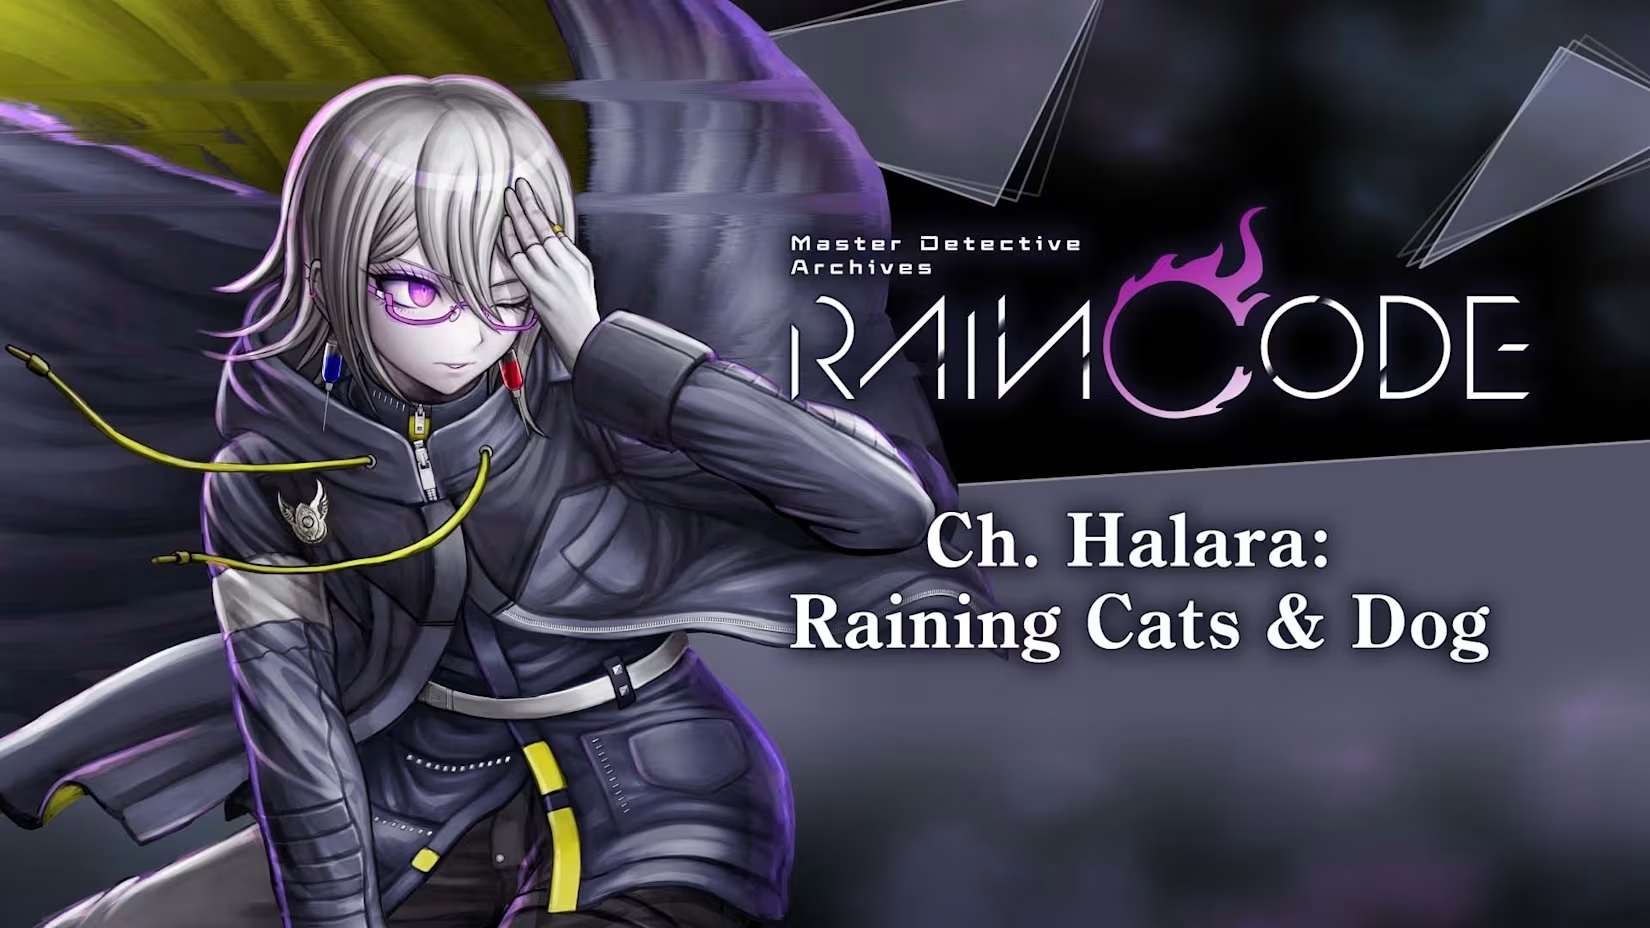 Master Detective Archives: RAIN CODE - Ch. Halara: Raining Cats & Dog